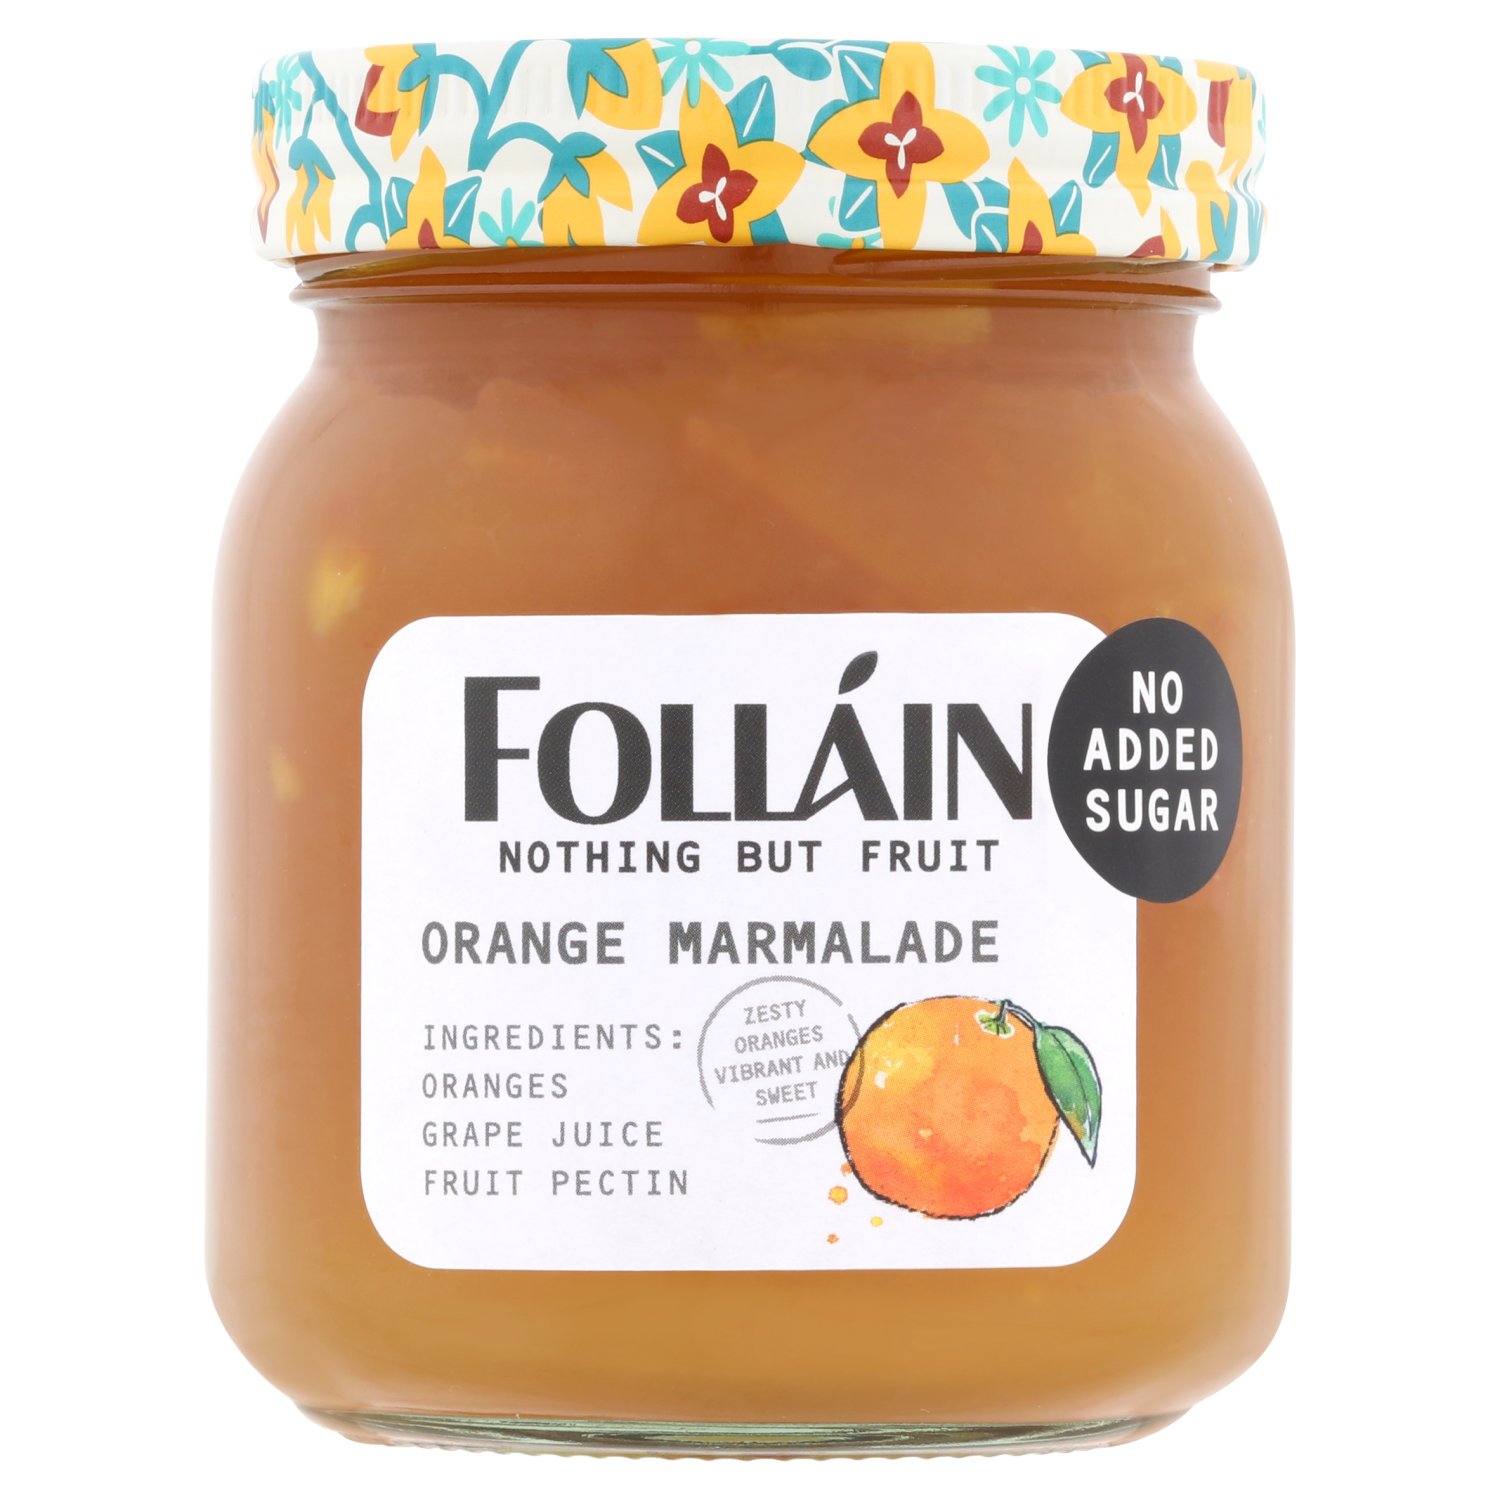 Follain Nothing But Fruit Orange Marmalade (340 g)